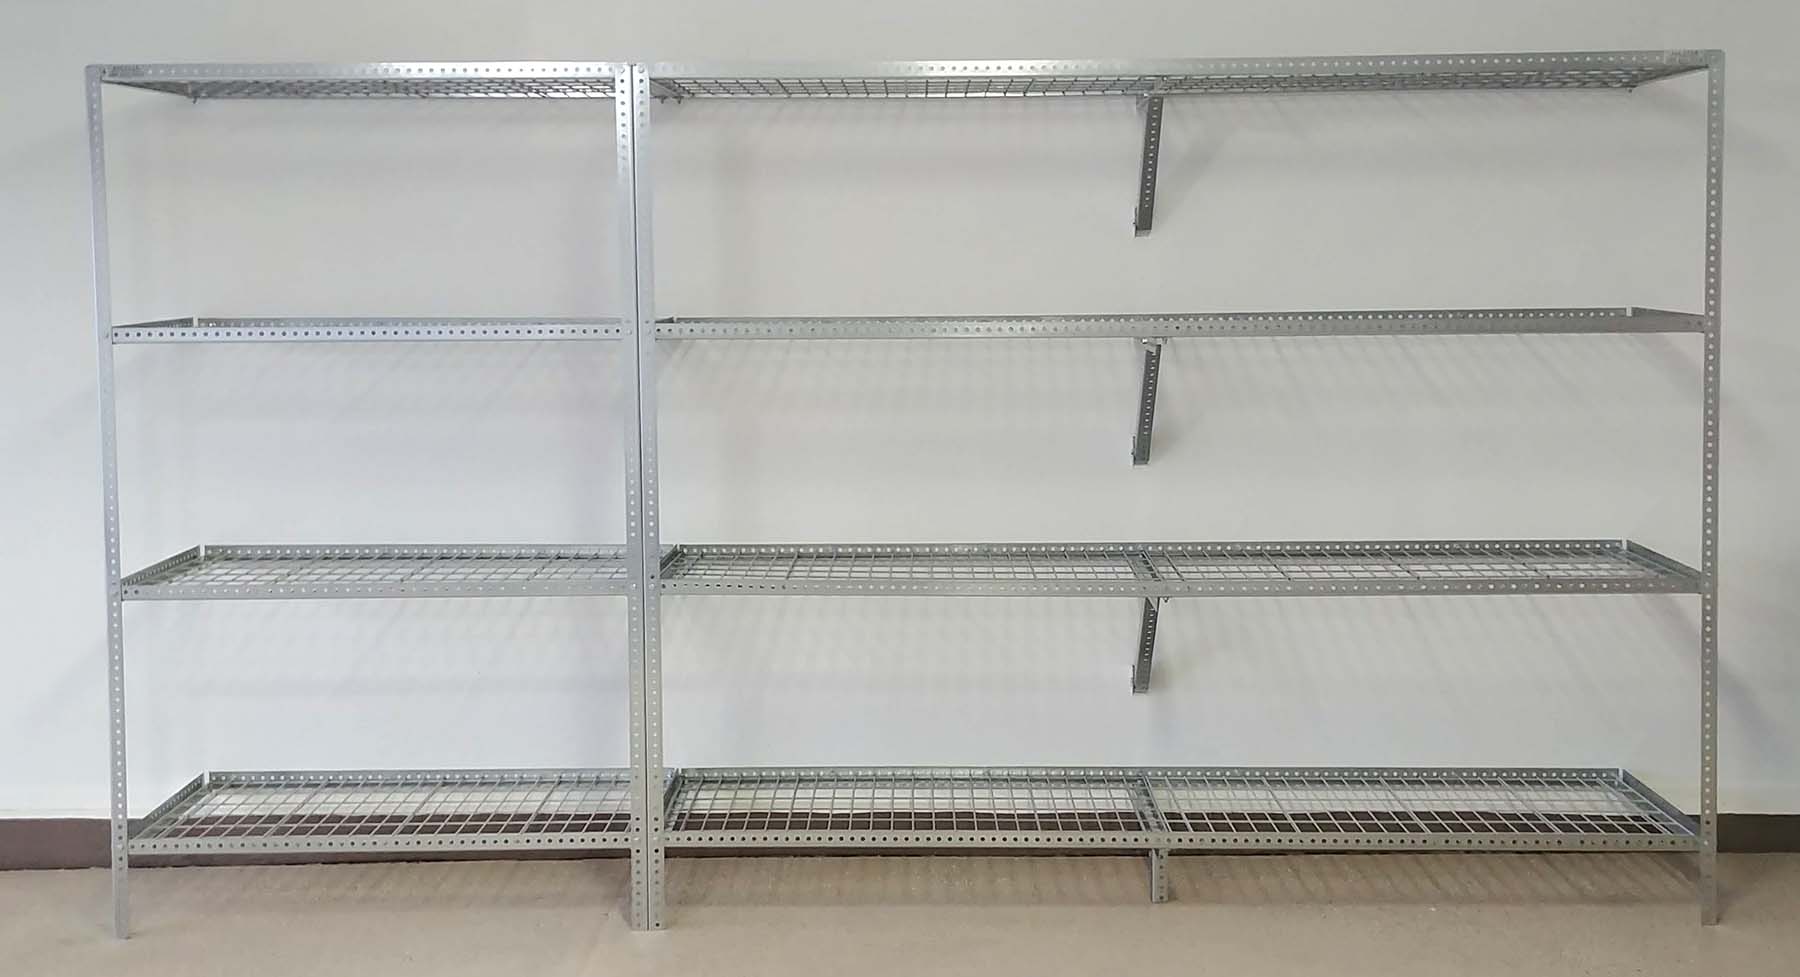 Garage Storage Shelves In Phoenix Az, How To Install Wire Shelving Garage